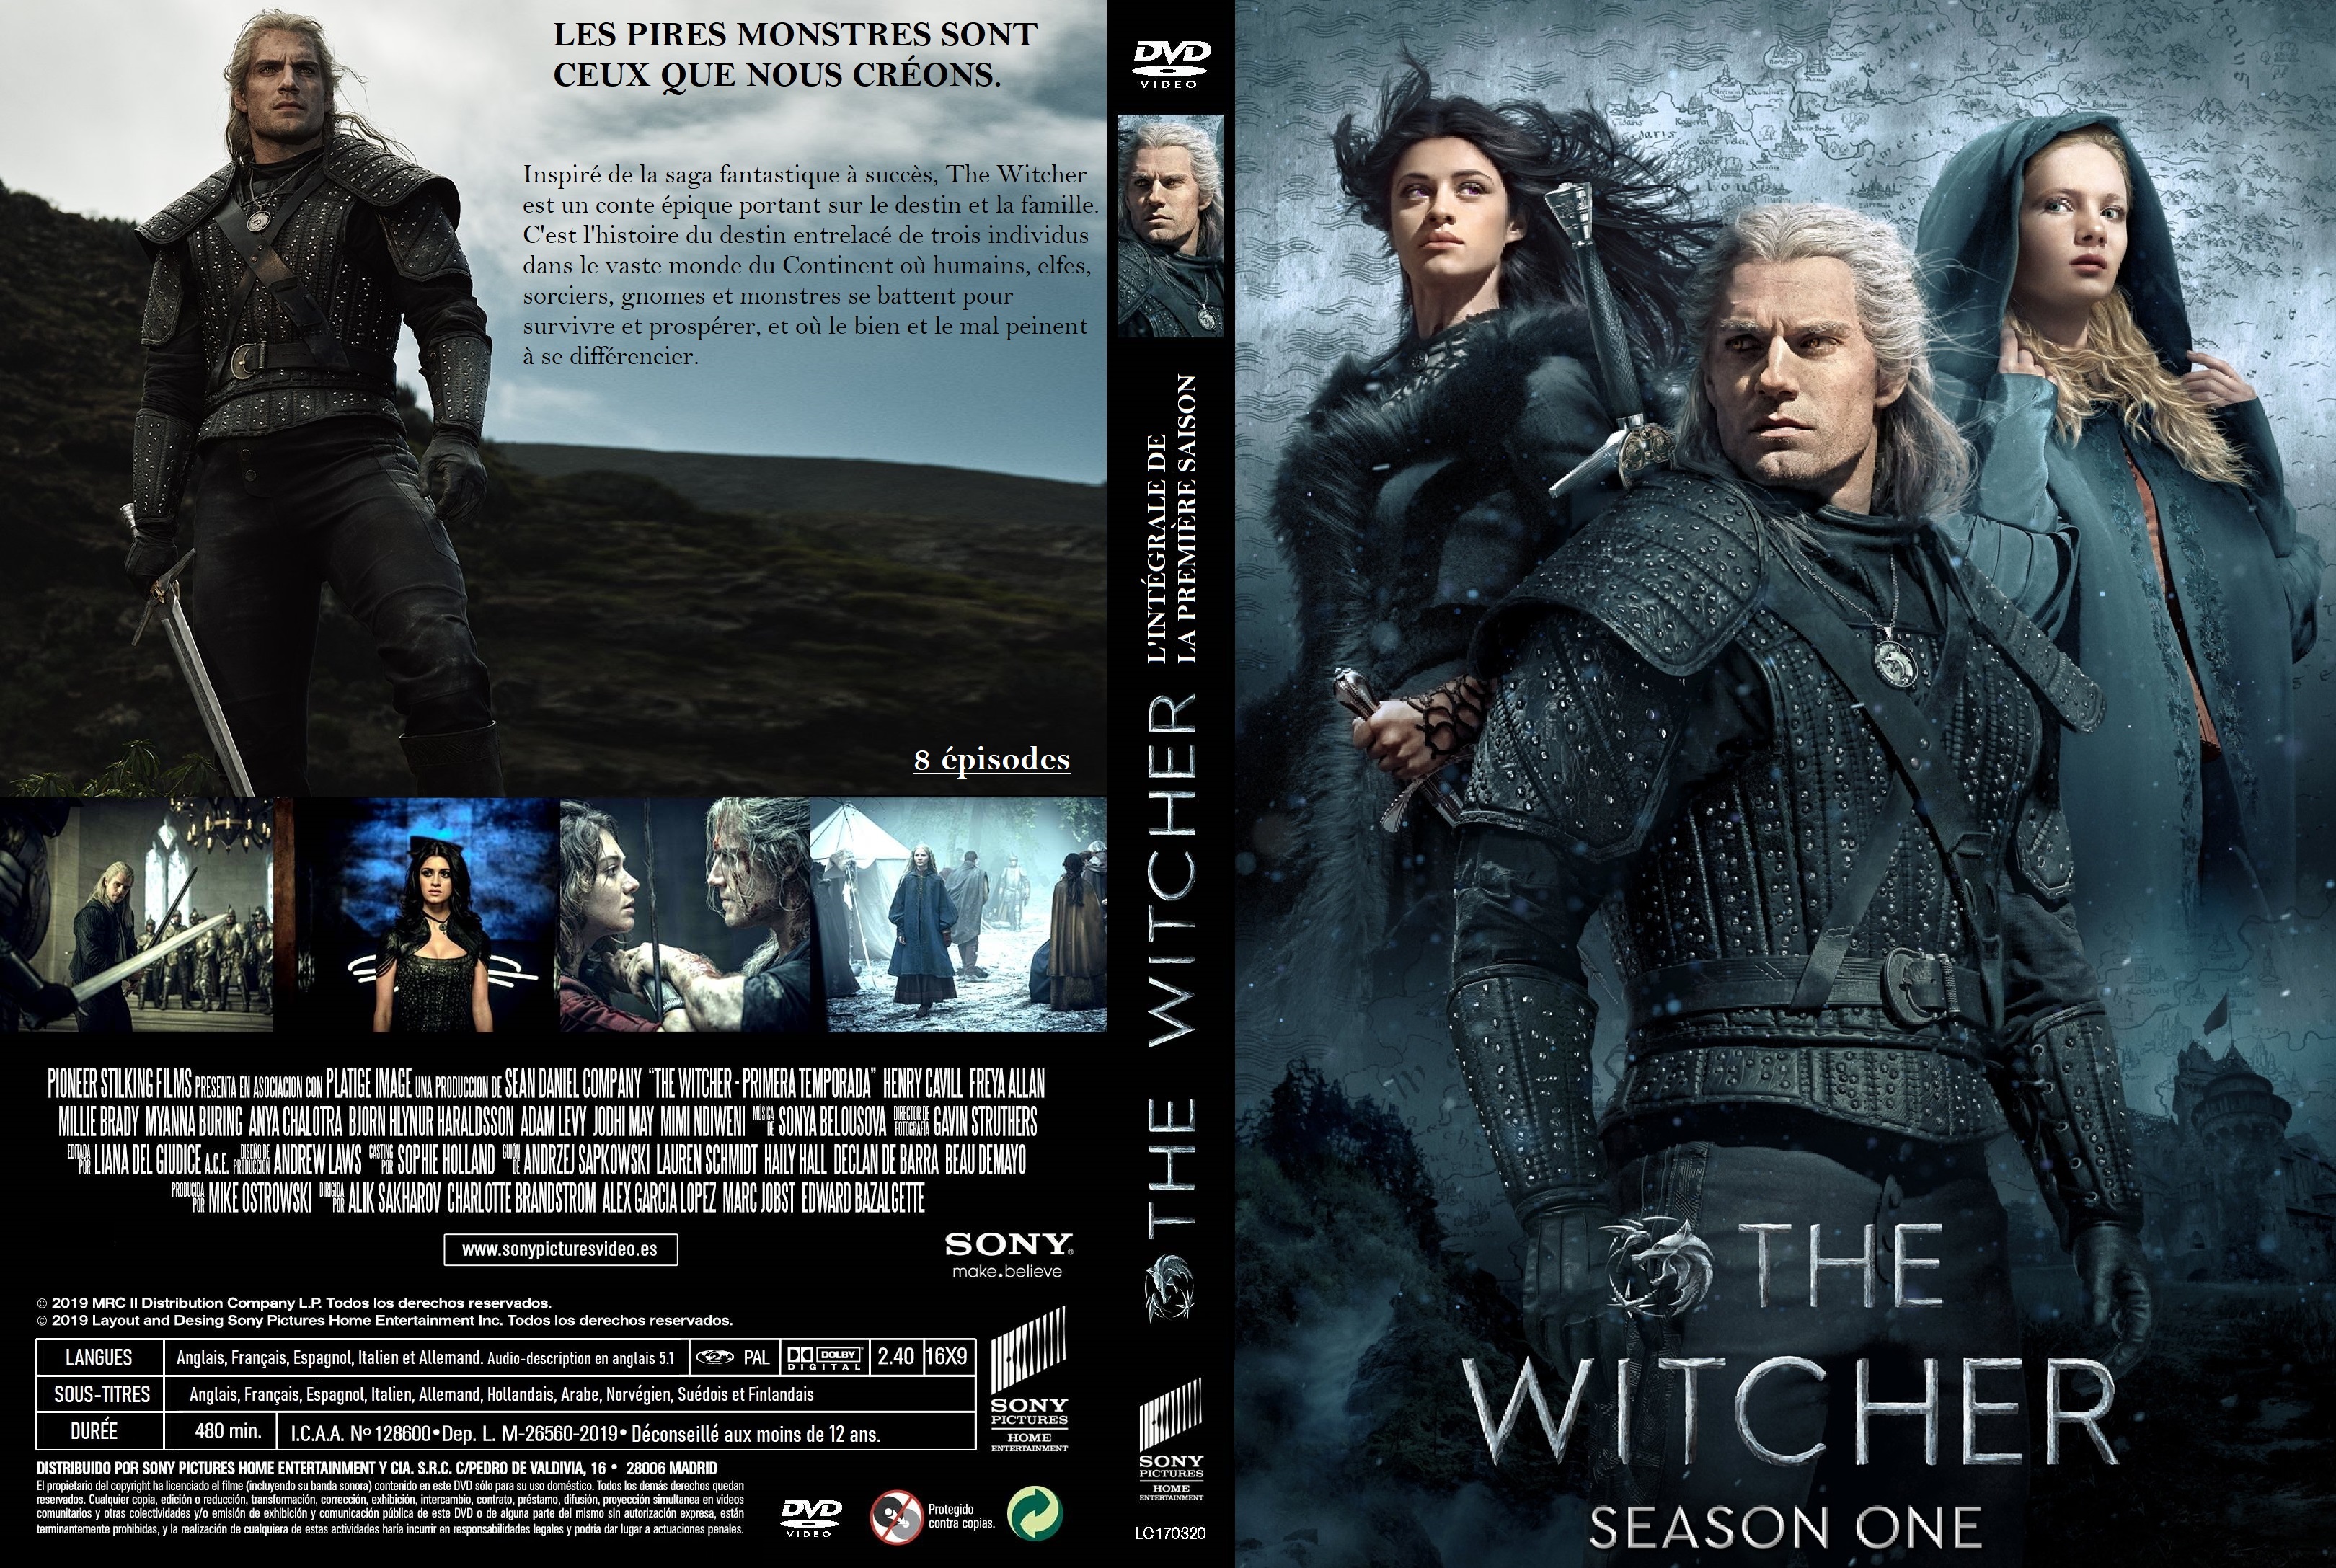 Jaquette DVD The Witcher Saison 01 Custom v2